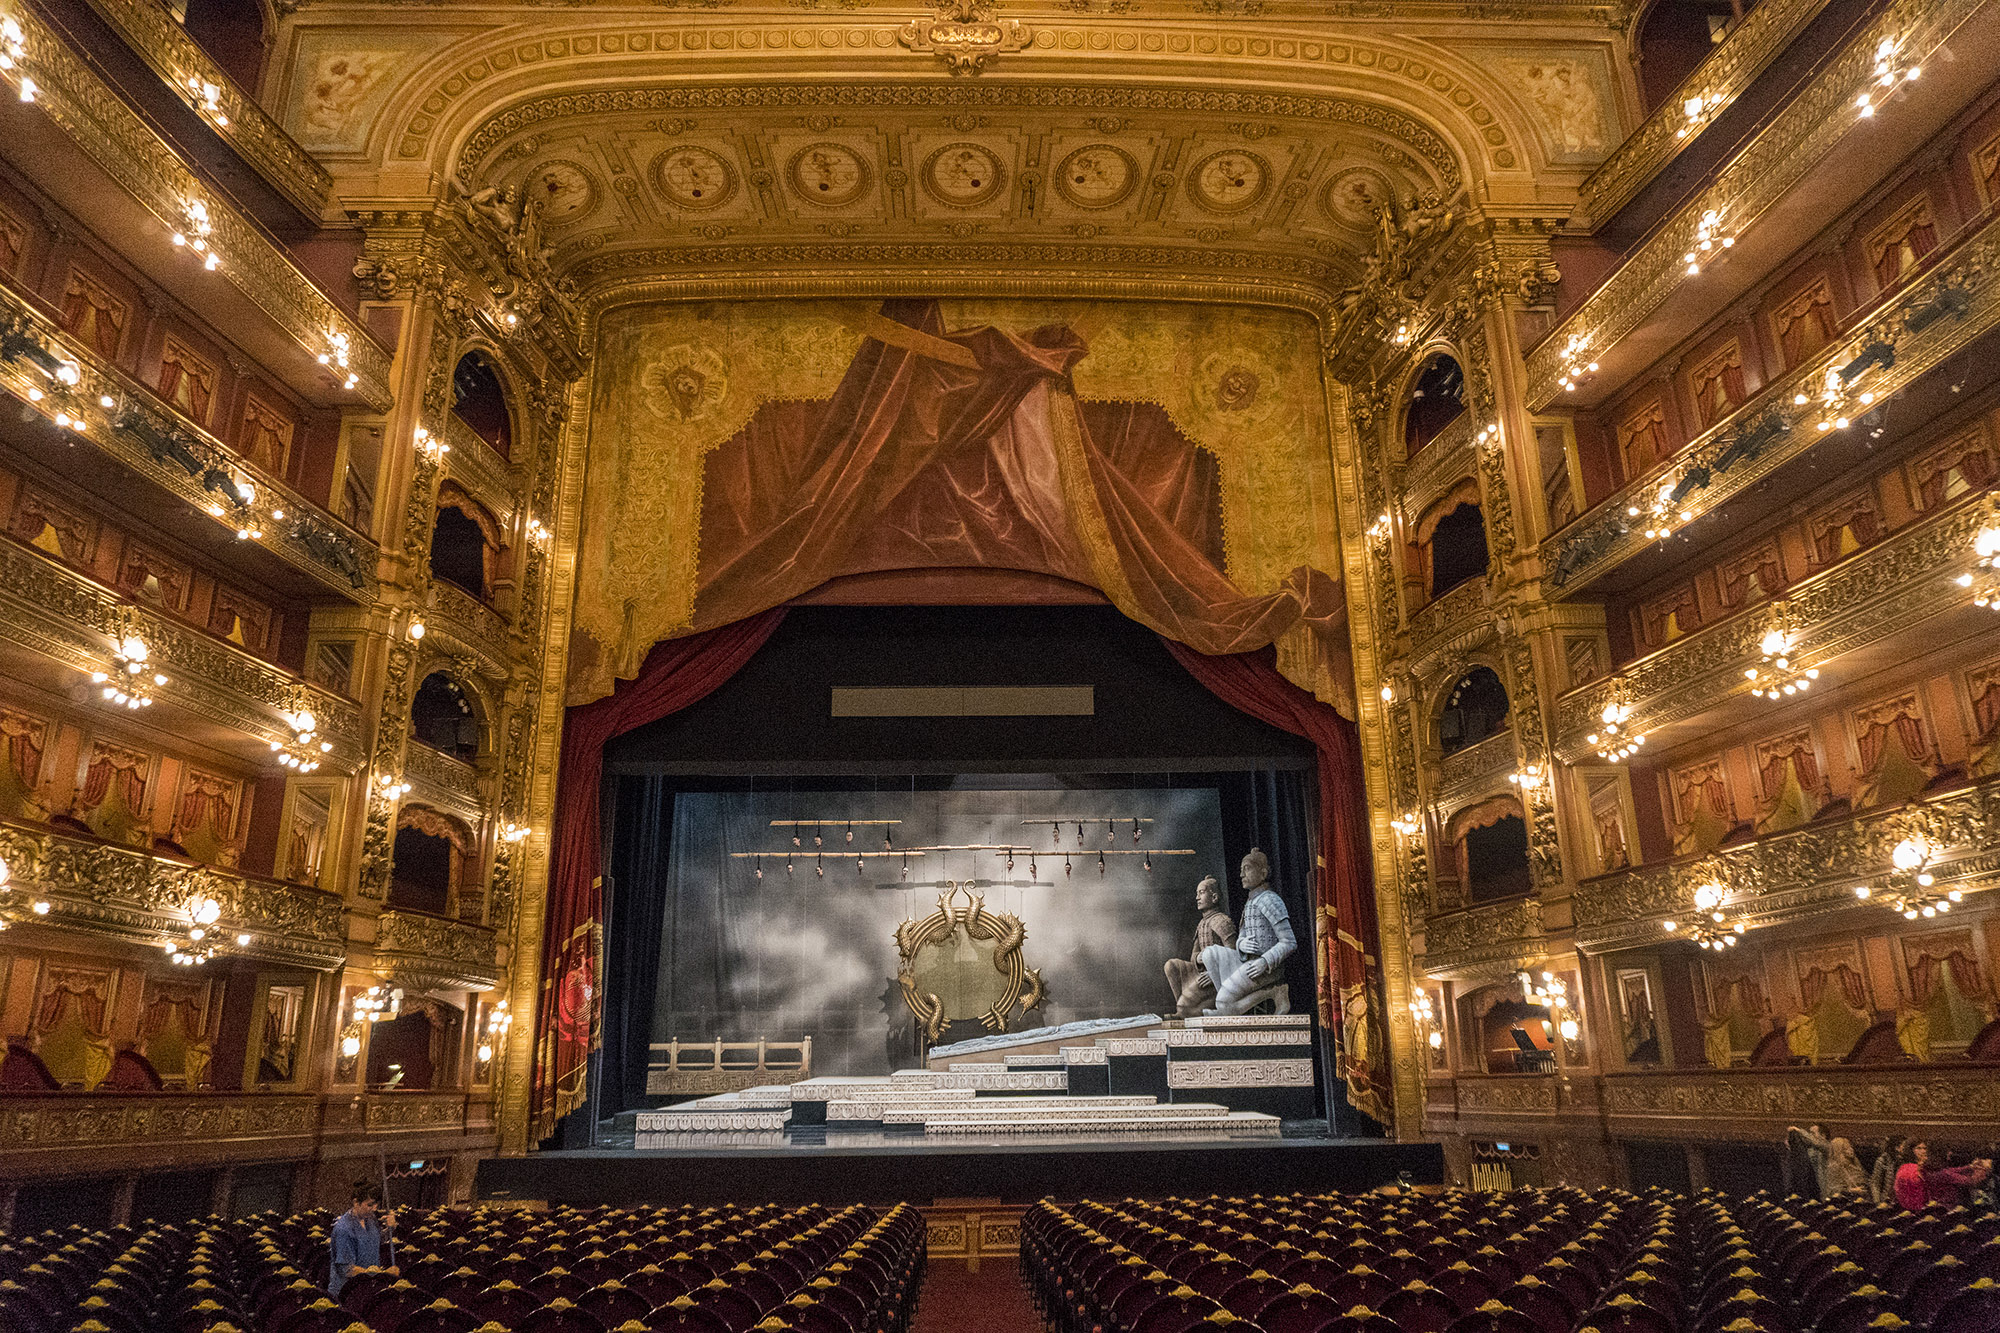 Teatro Colon - Buenos Aires